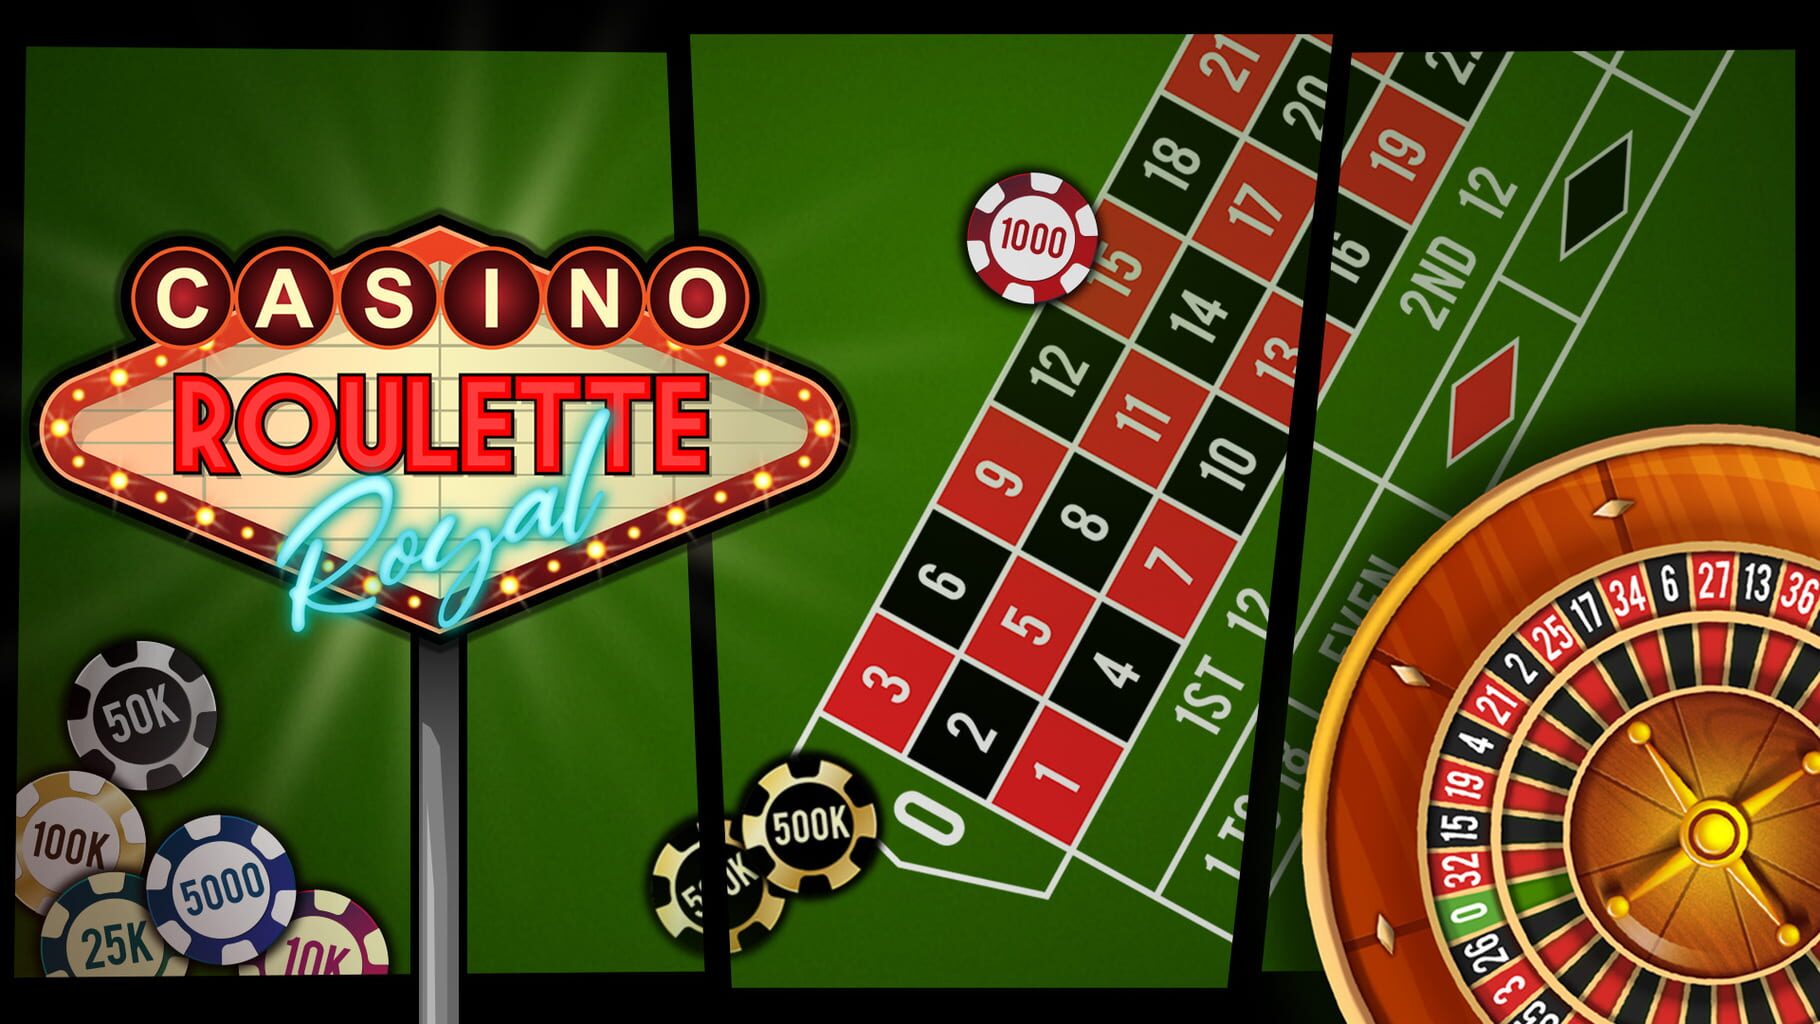 Casino Roulette Royal artwork